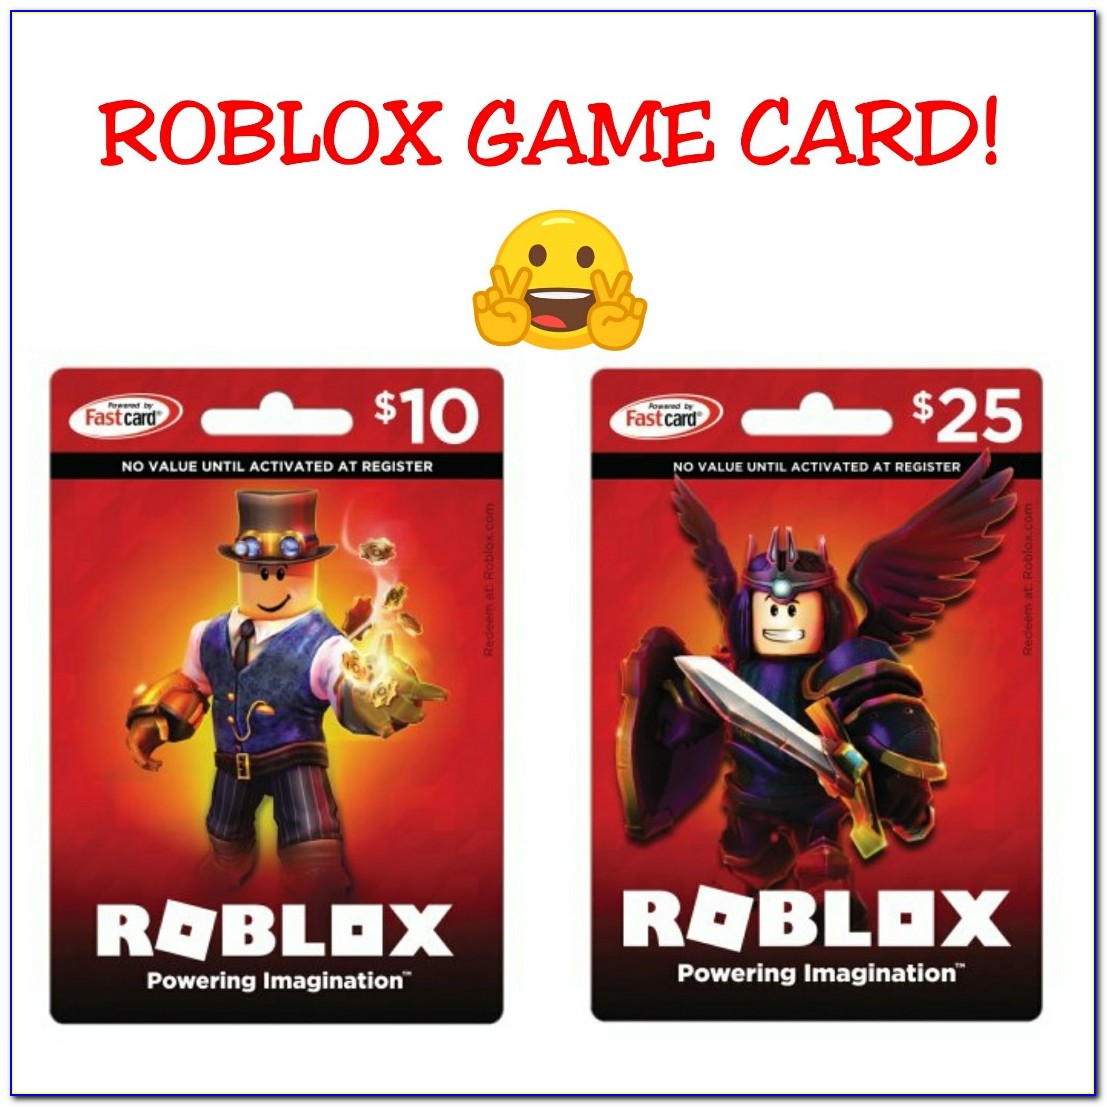 Free Roblox Card No Human Verification